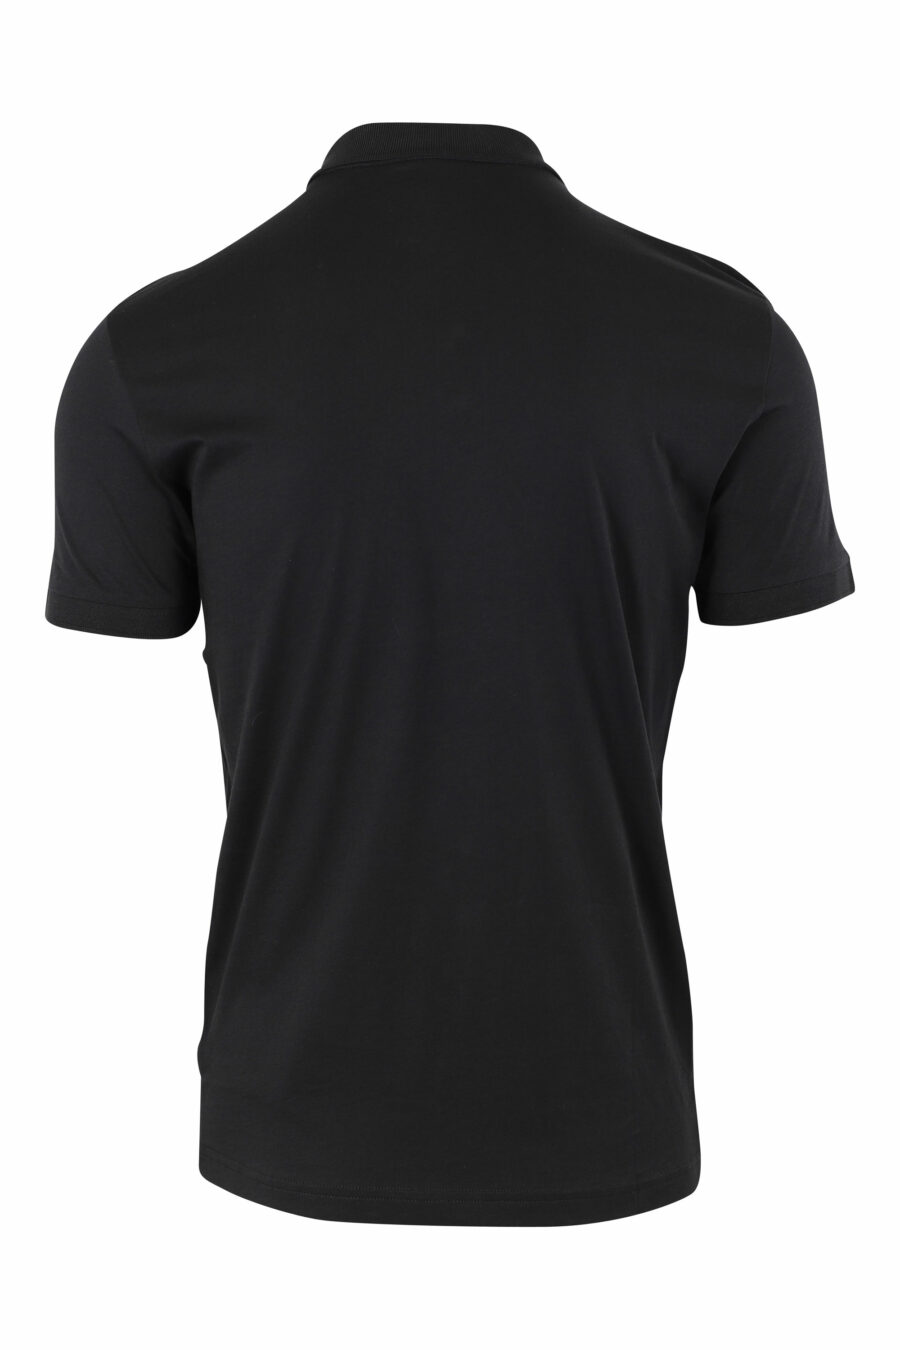 Schwarzes Poloshirt mit Mini-Gummiabzeichen - IMG 9655